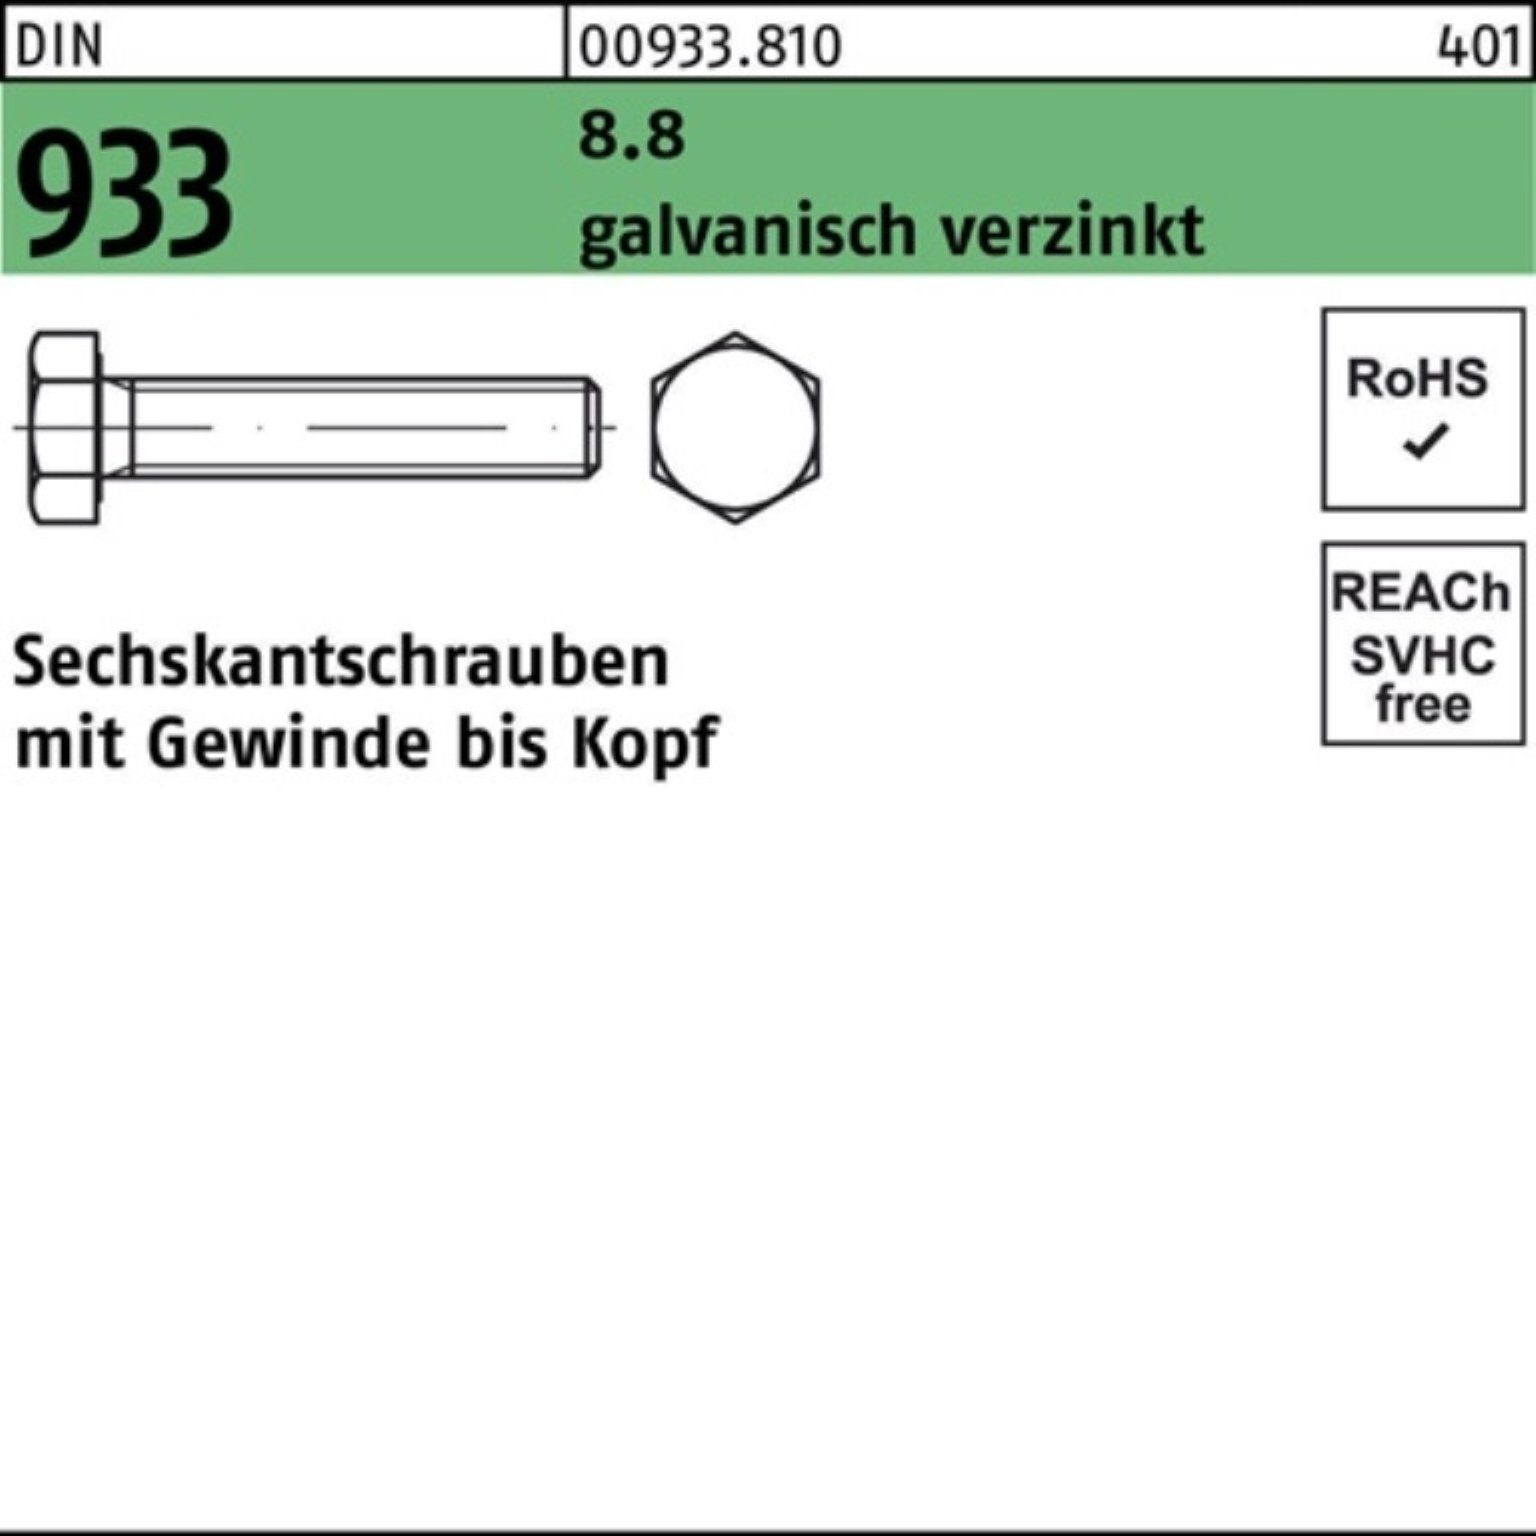 VG Sechskantschraube Stü 933 galv.verz. M4x DIN 45 500er 8.8 Reyher 500 Pack Sechskantschraube